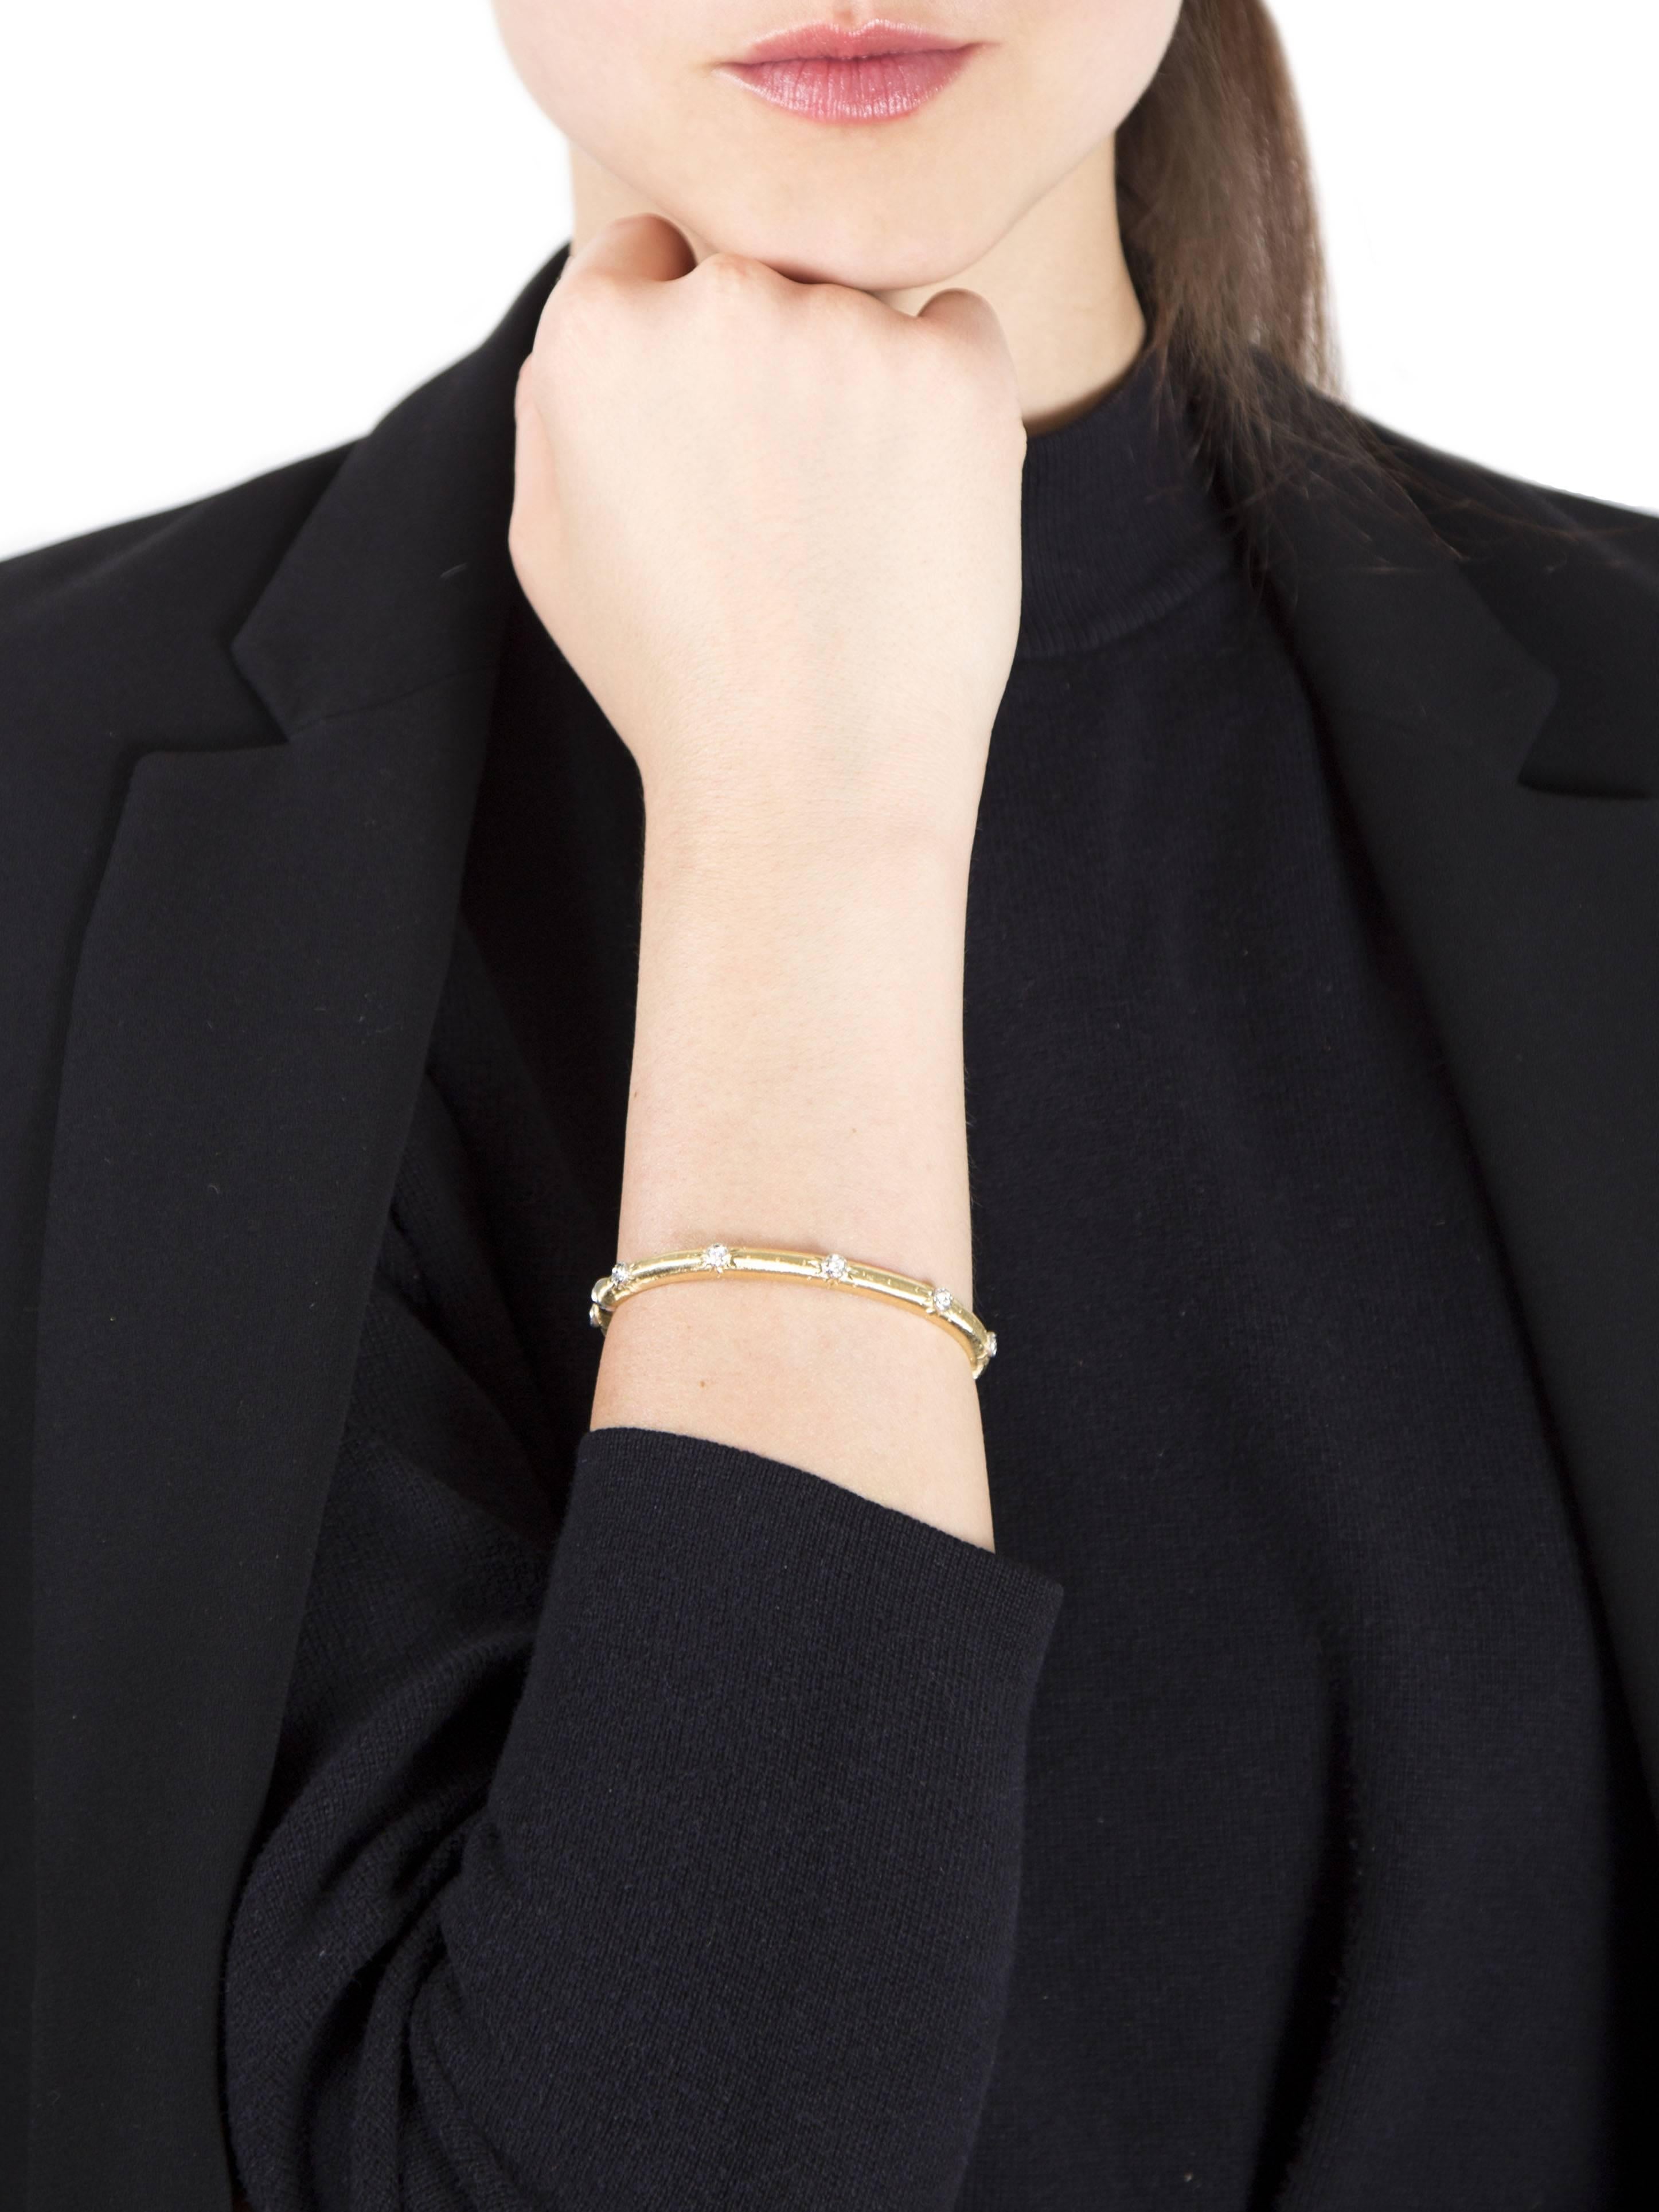 Diamond Yellow Gold Bracelet Bangle by Opera, Italian Attitude In New Condition For Sale In Milano, IT